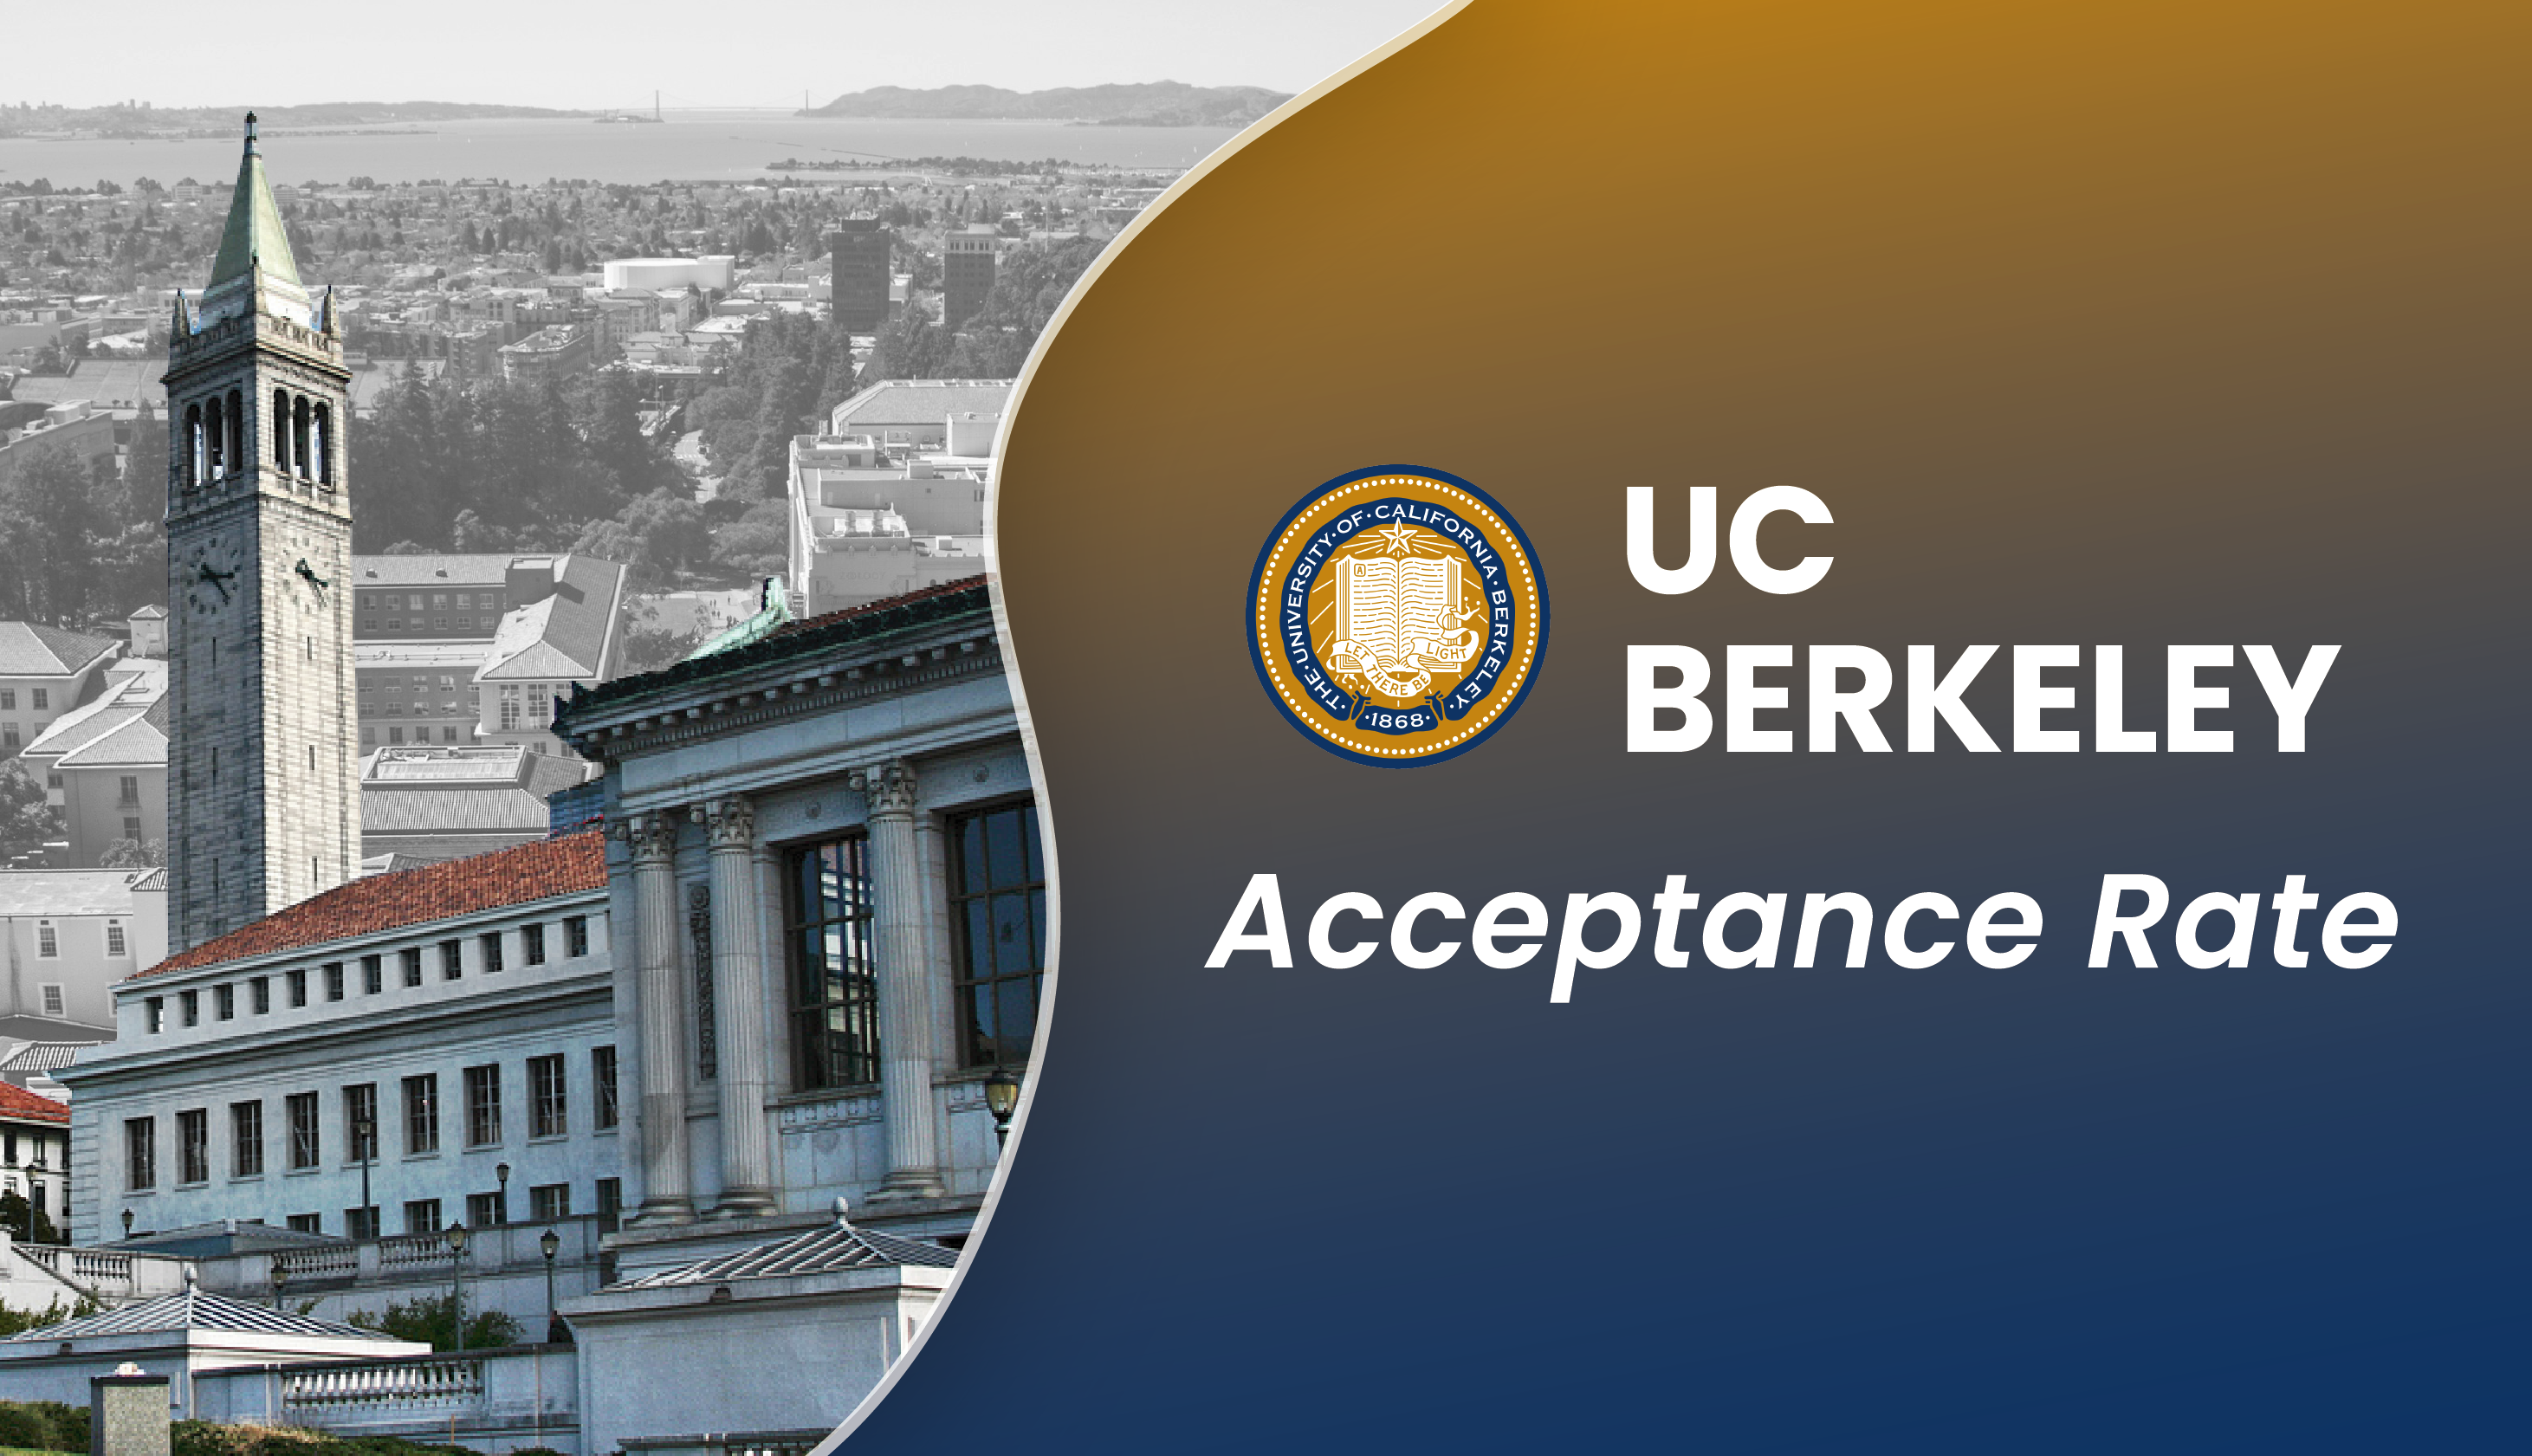 uc berkeley mechanical engineering phd acceptance rate